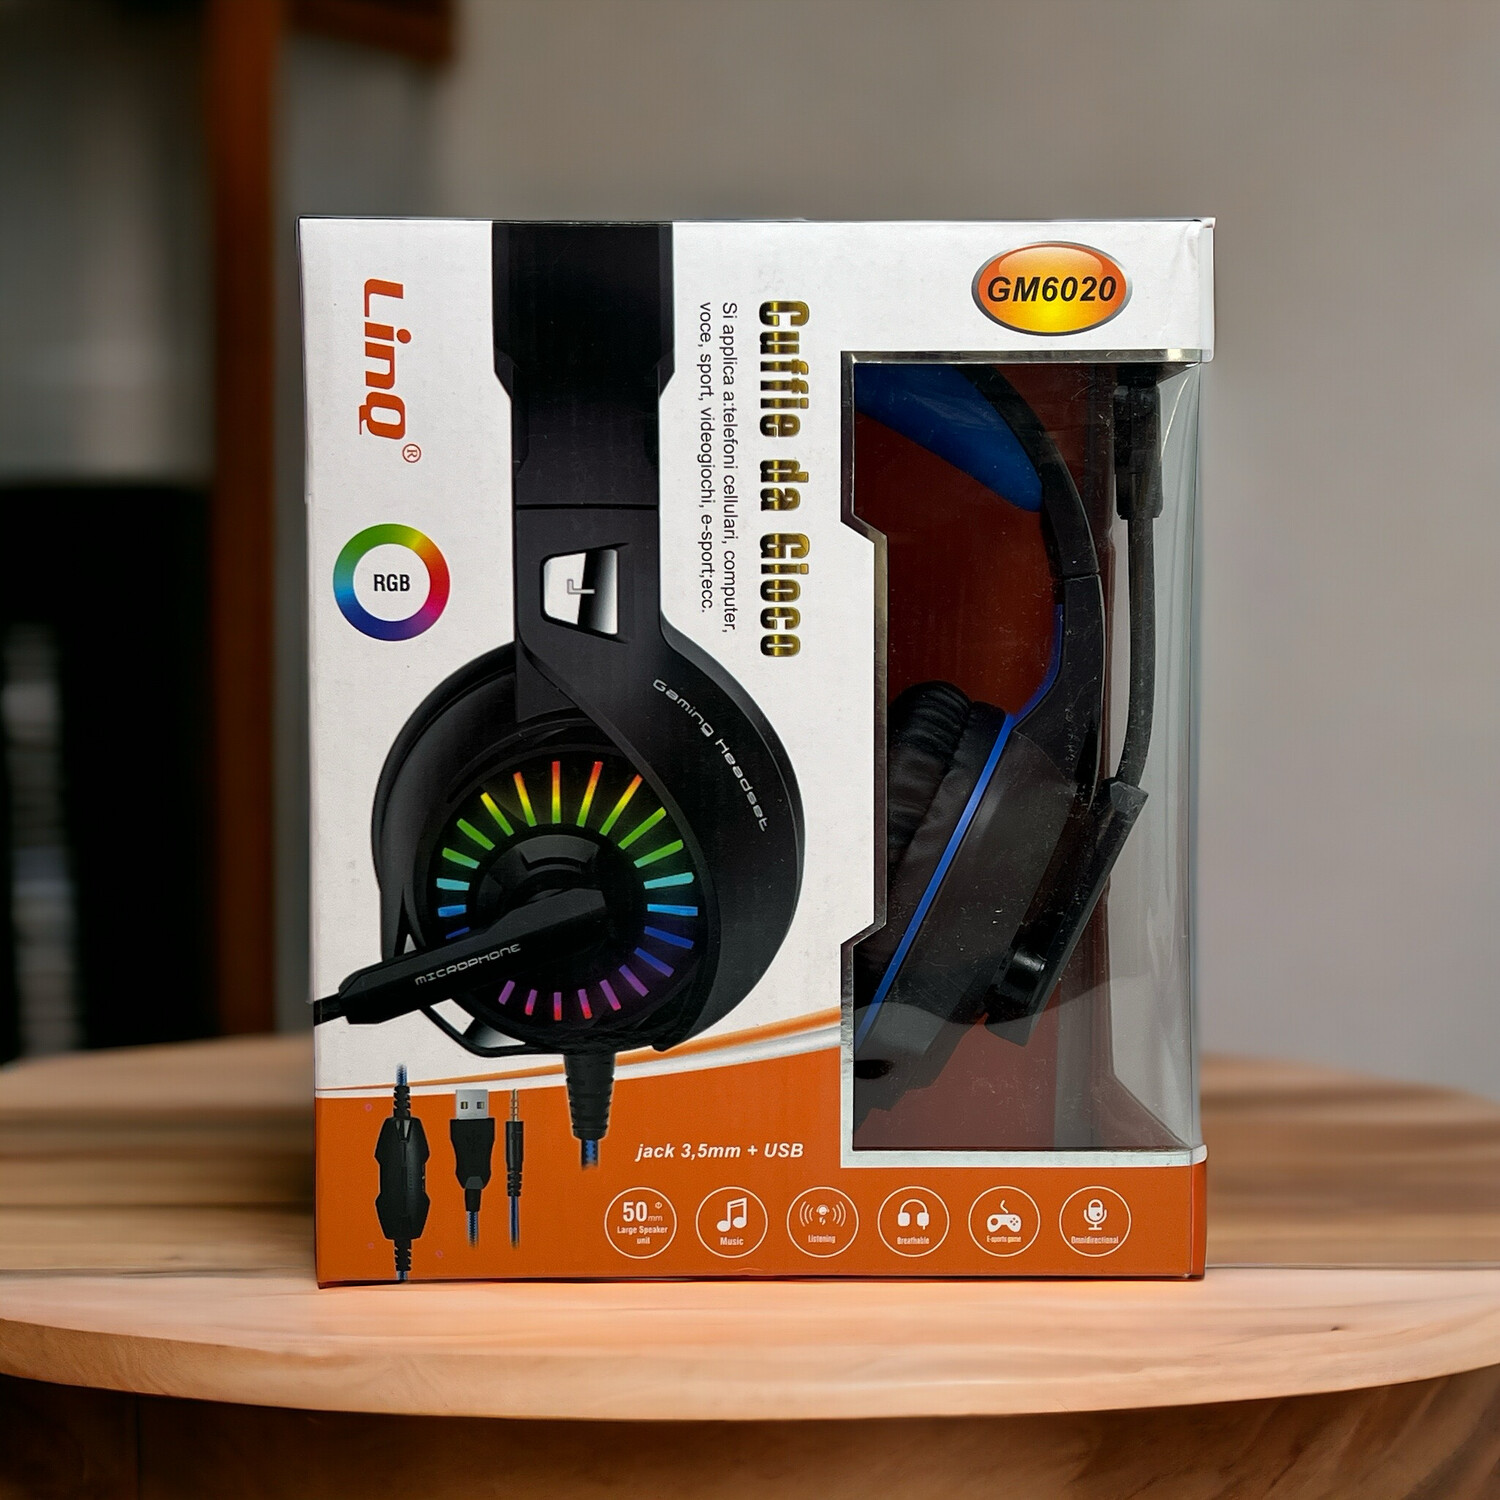 Cuffie RGB Linq GM6020 - Audio Superiore per Gaming